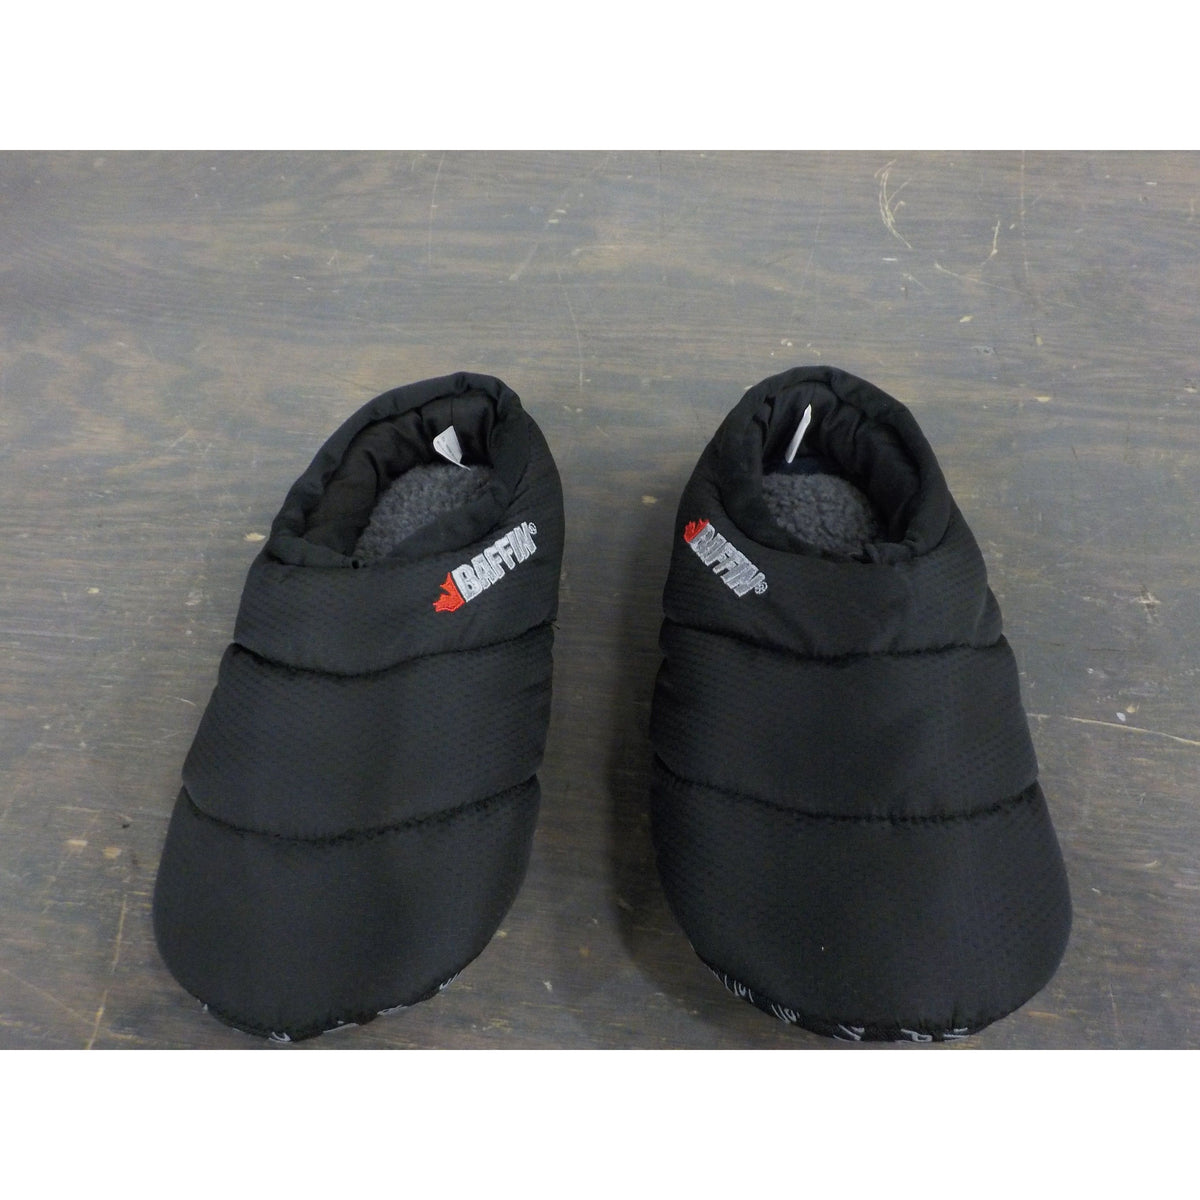 Baffin Cush Hybrid Slipper - Black - Medium - Used - Acceptable